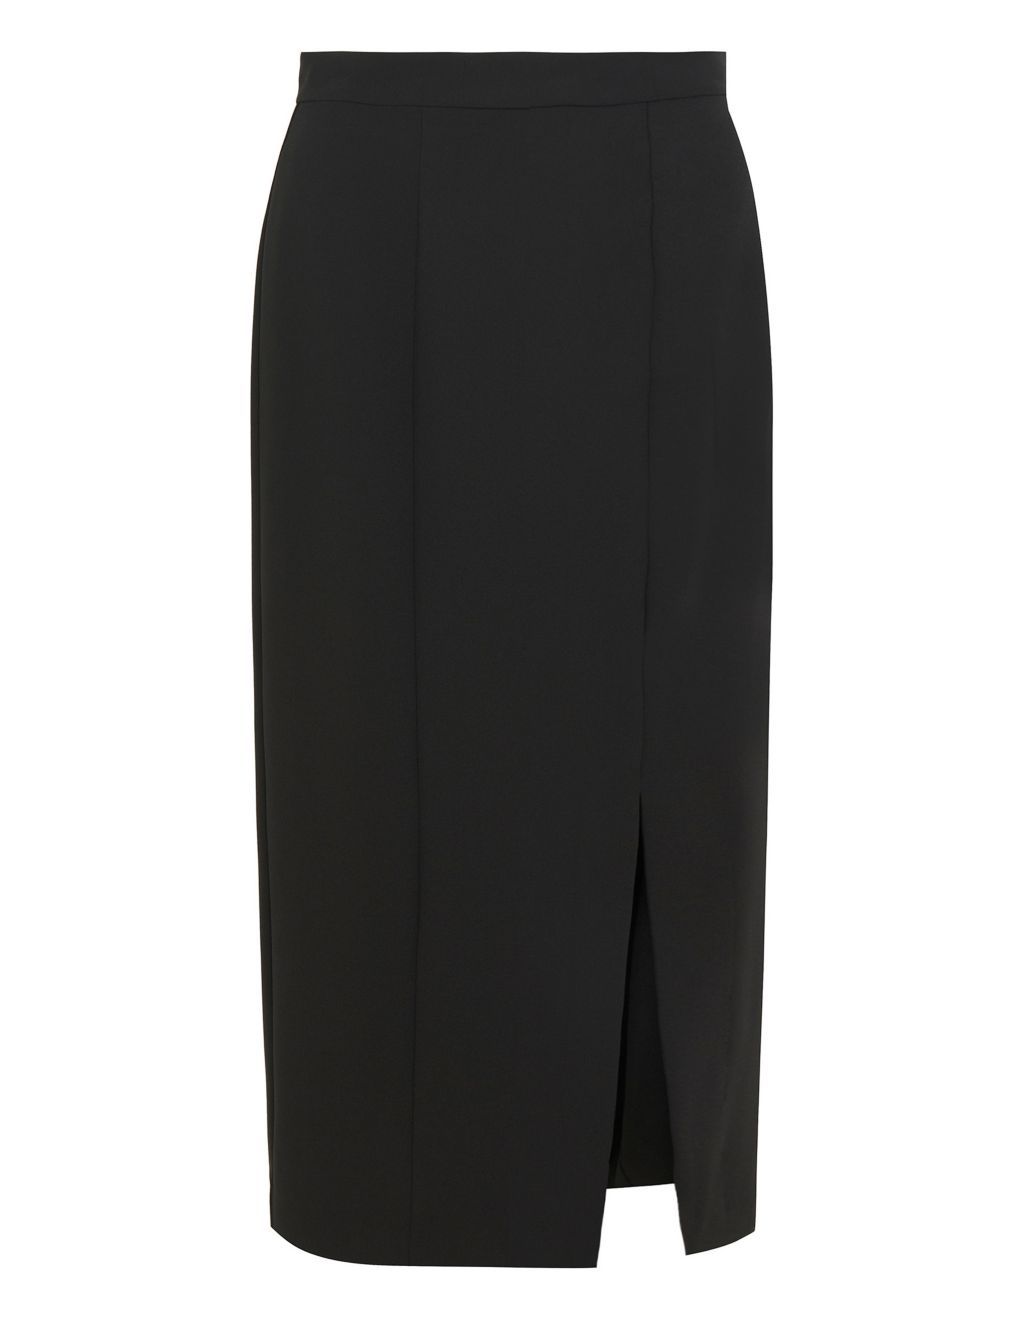 Midi Pencil Skirt | Finery London | M&S